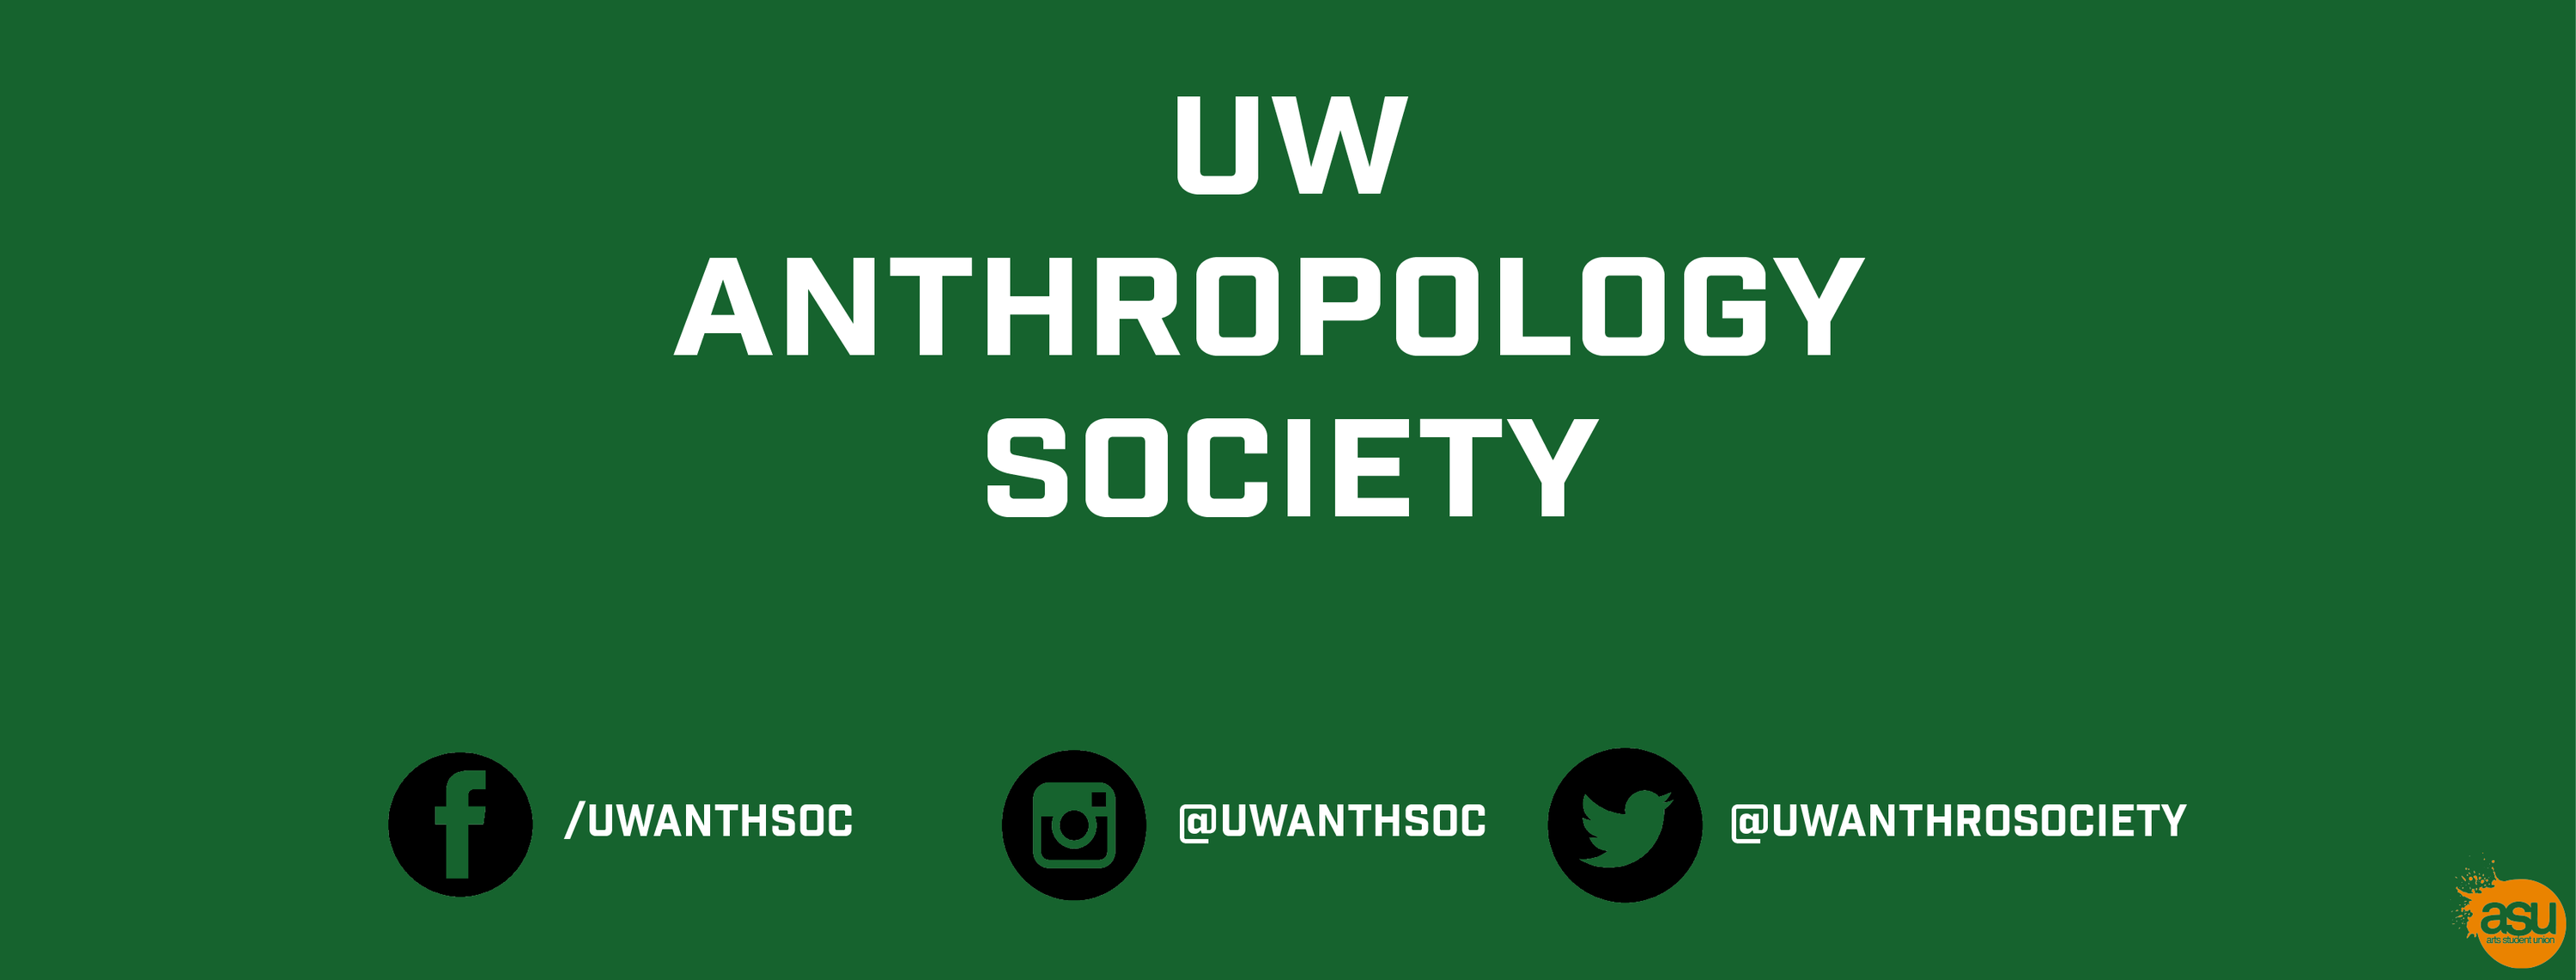 UW Anthropology Society